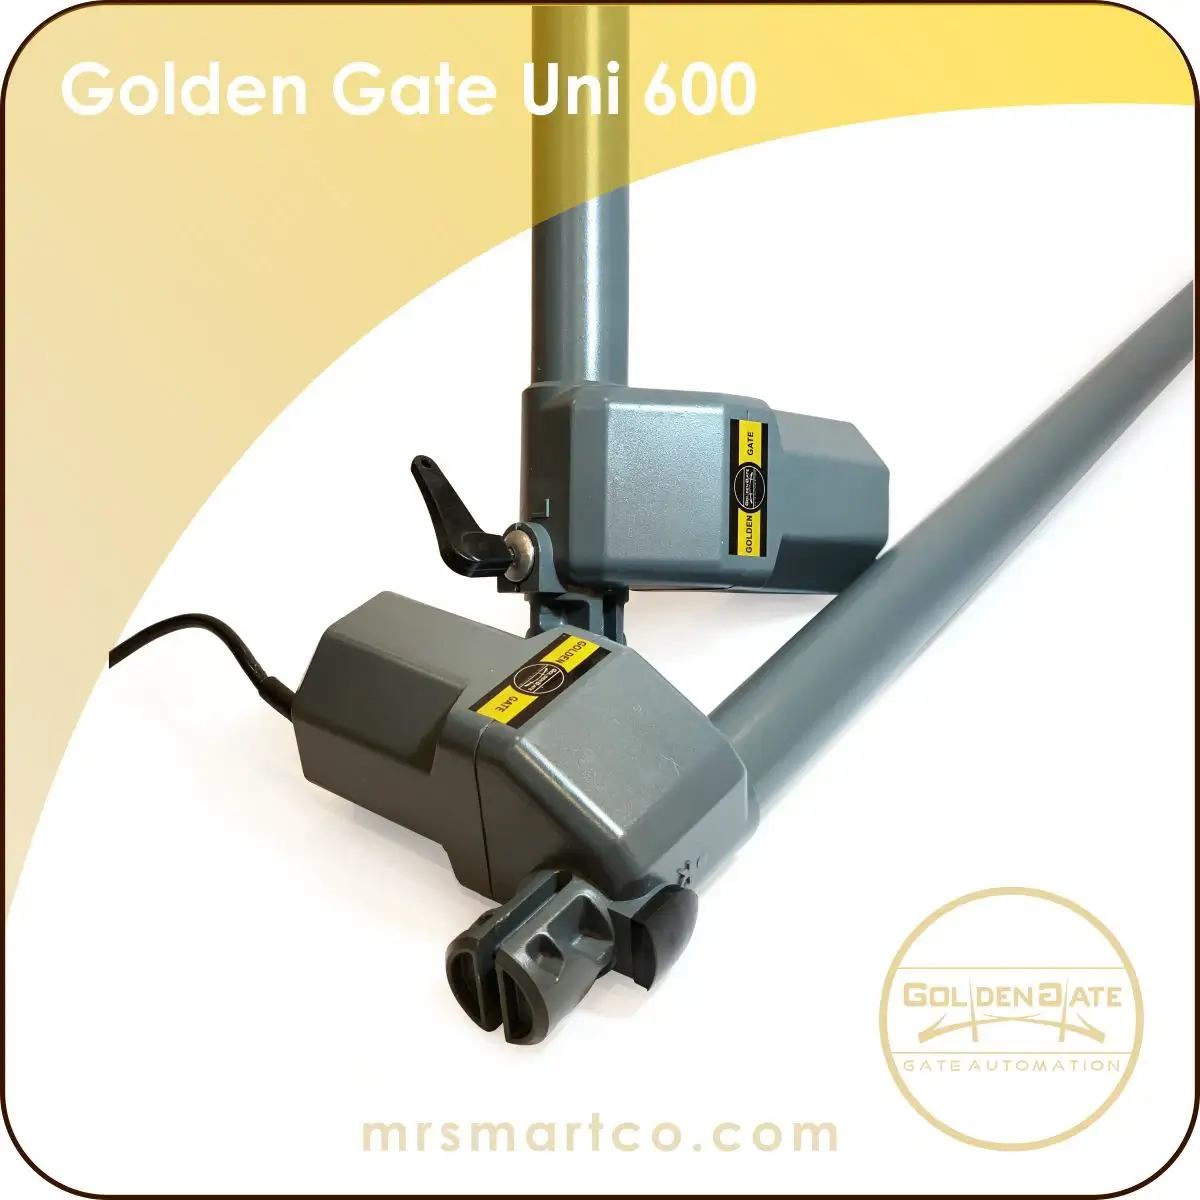 GOLDEN GATE UNI 600